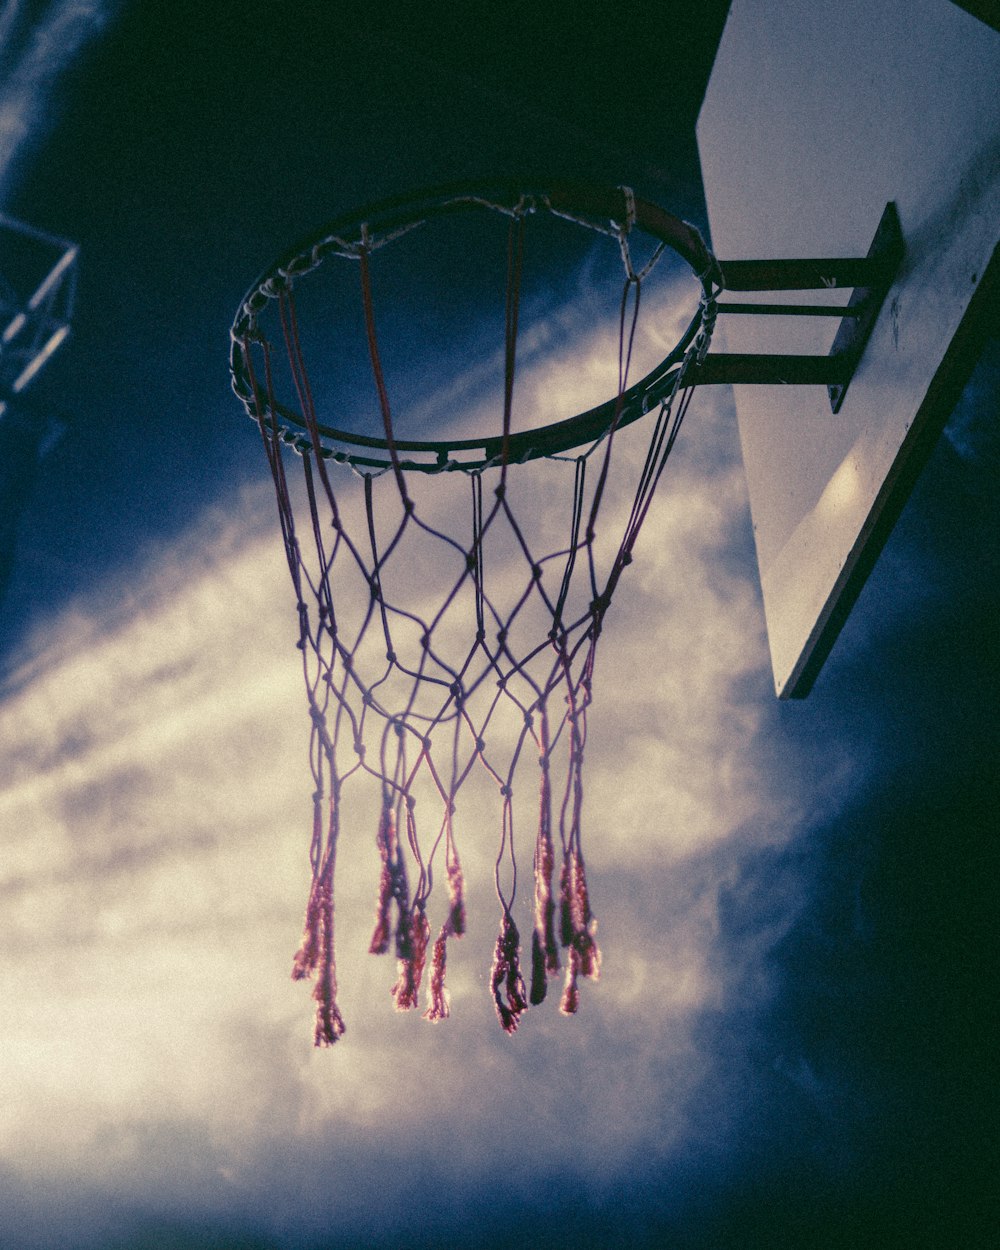 black basketball hoop under blue sky